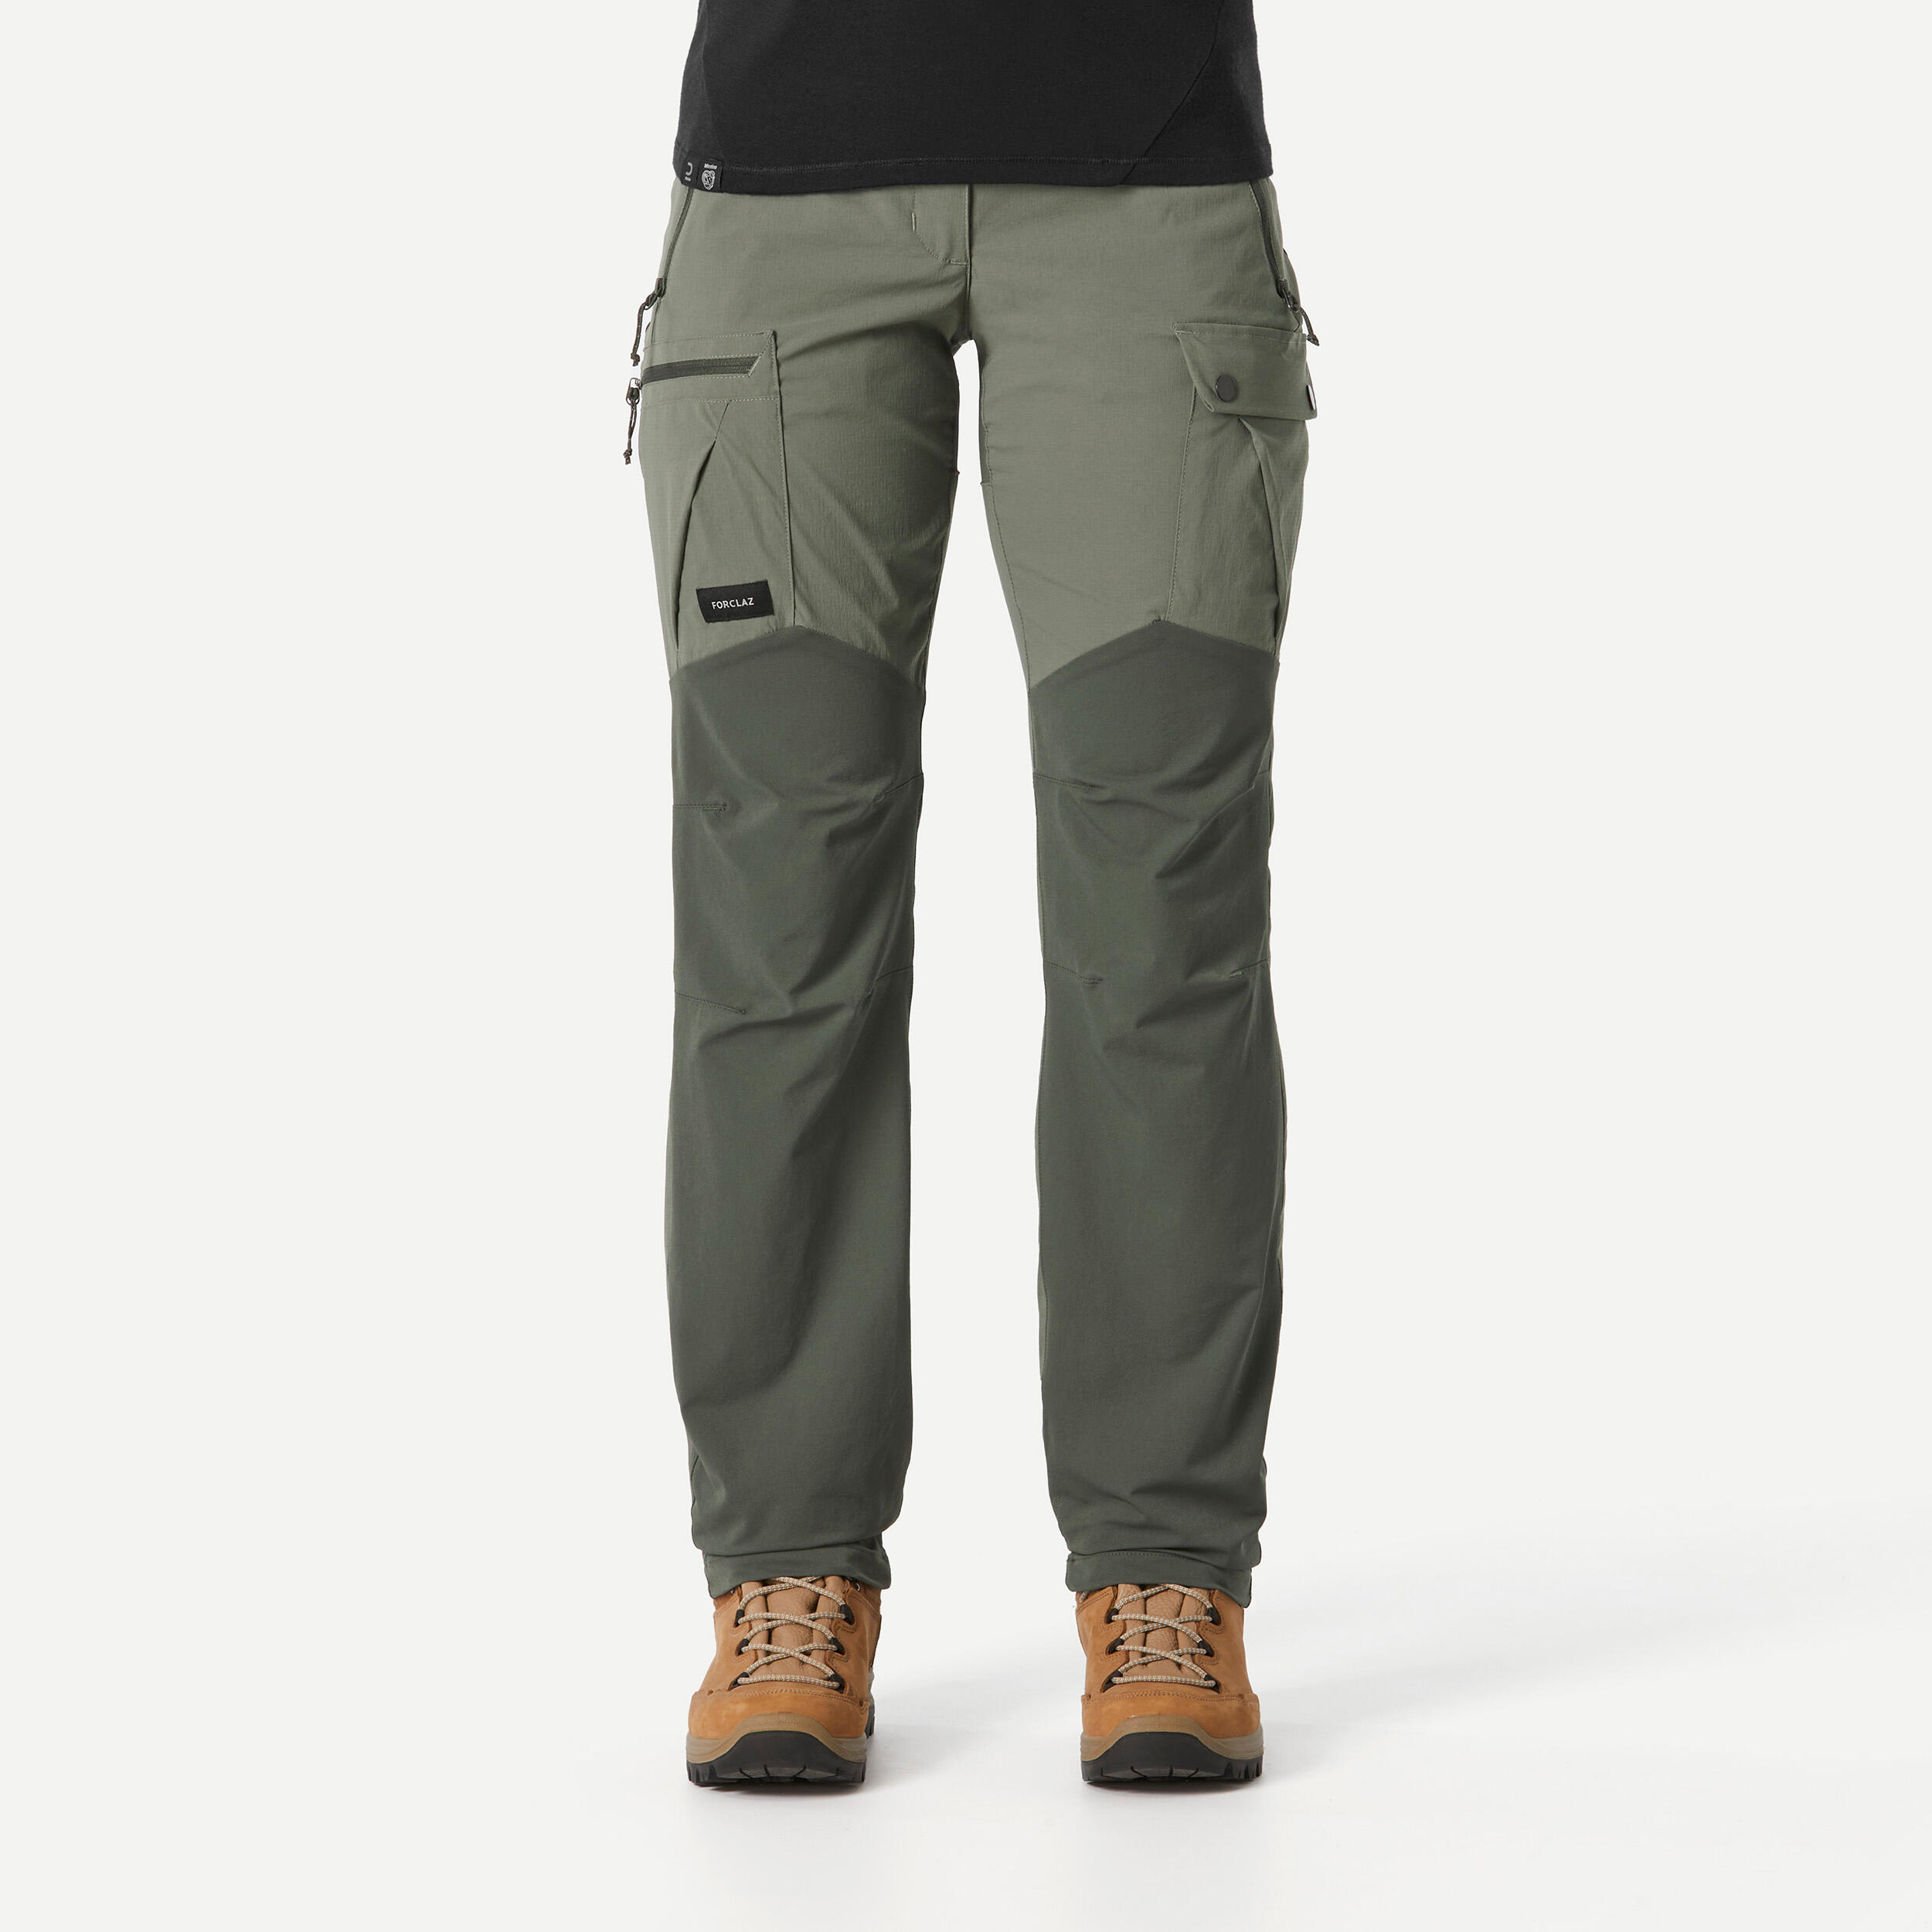 Women's Hiking Pants - MT 500 Khaki - Khaki brown, Black olive, Carbon grey  - Forclaz - Decathlon